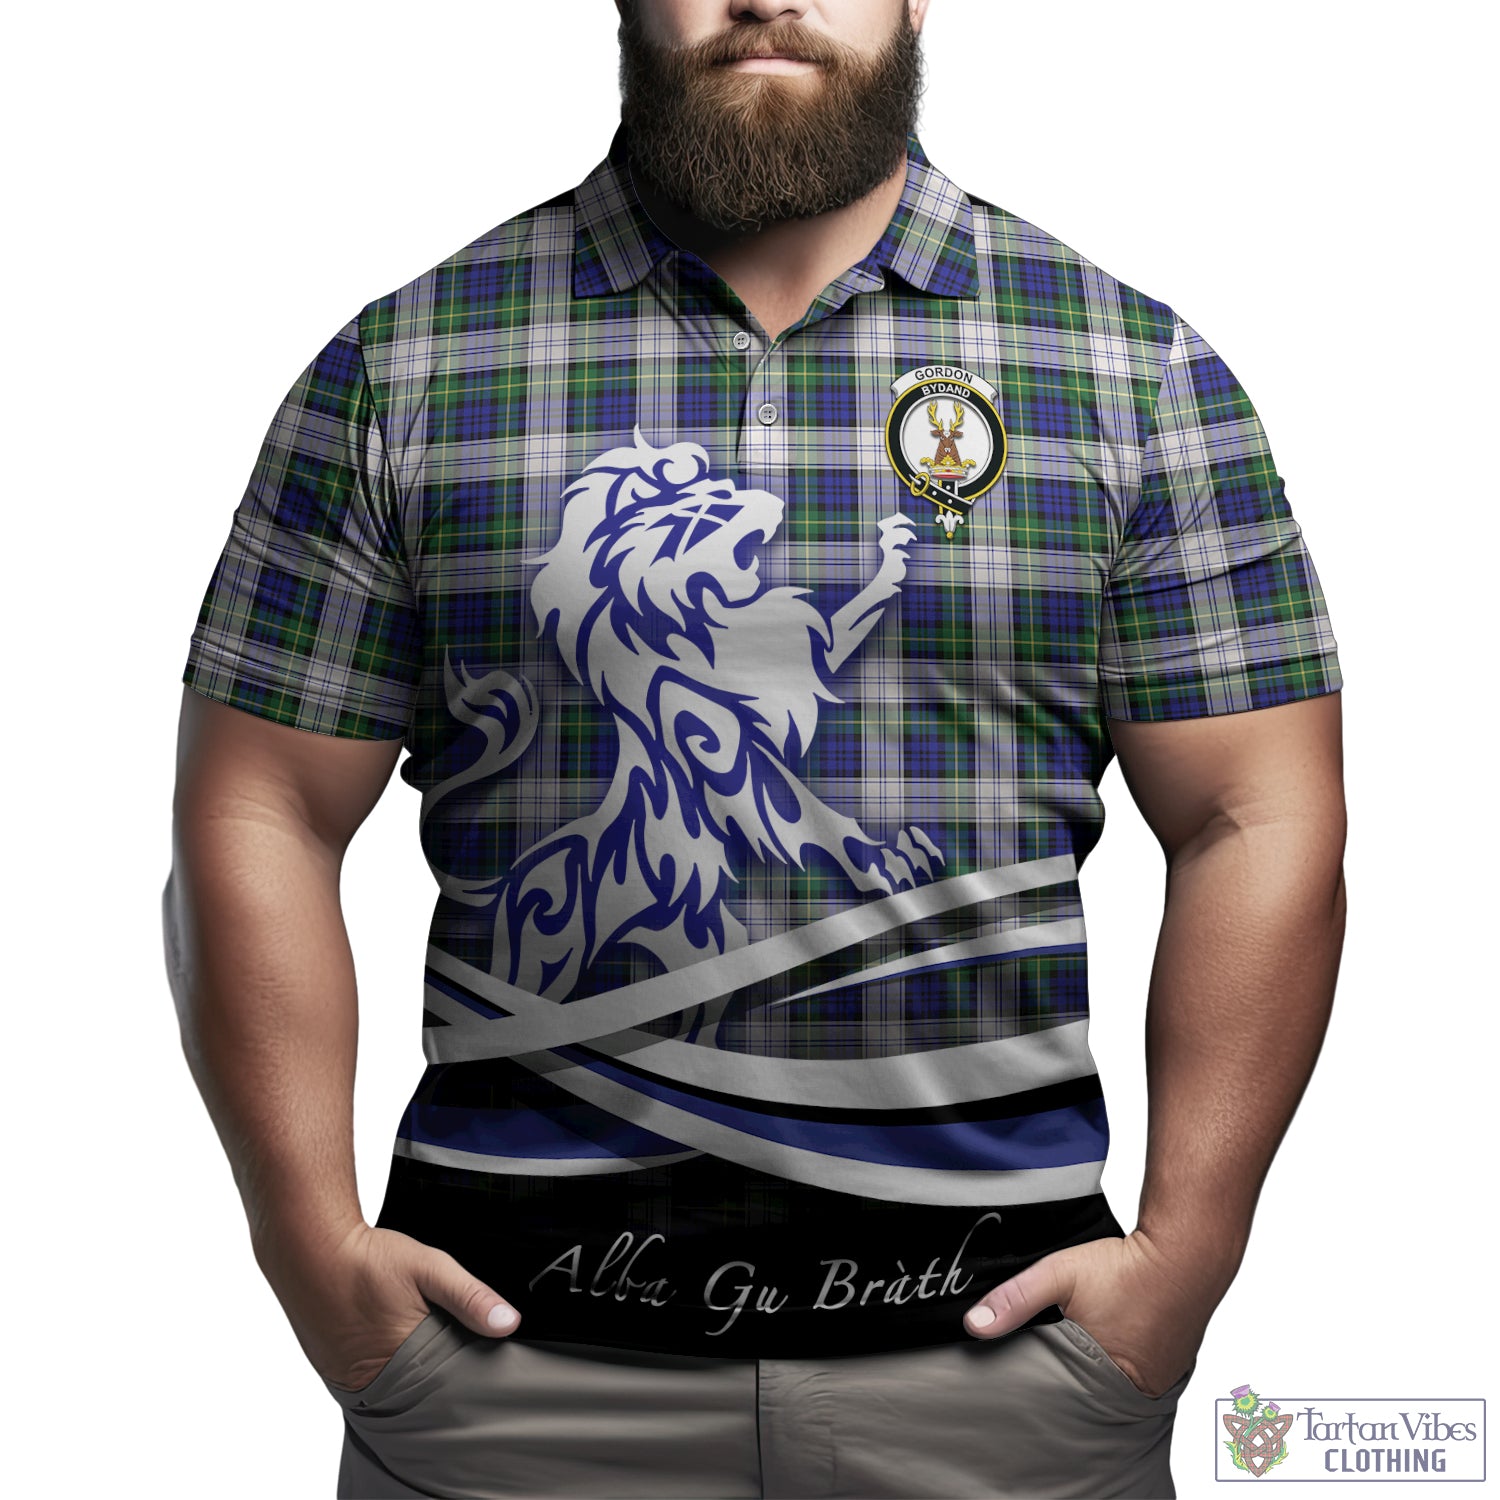 gordon-dress-modern-tartan-polo-shirt-with-alba-gu-brath-regal-lion-emblem